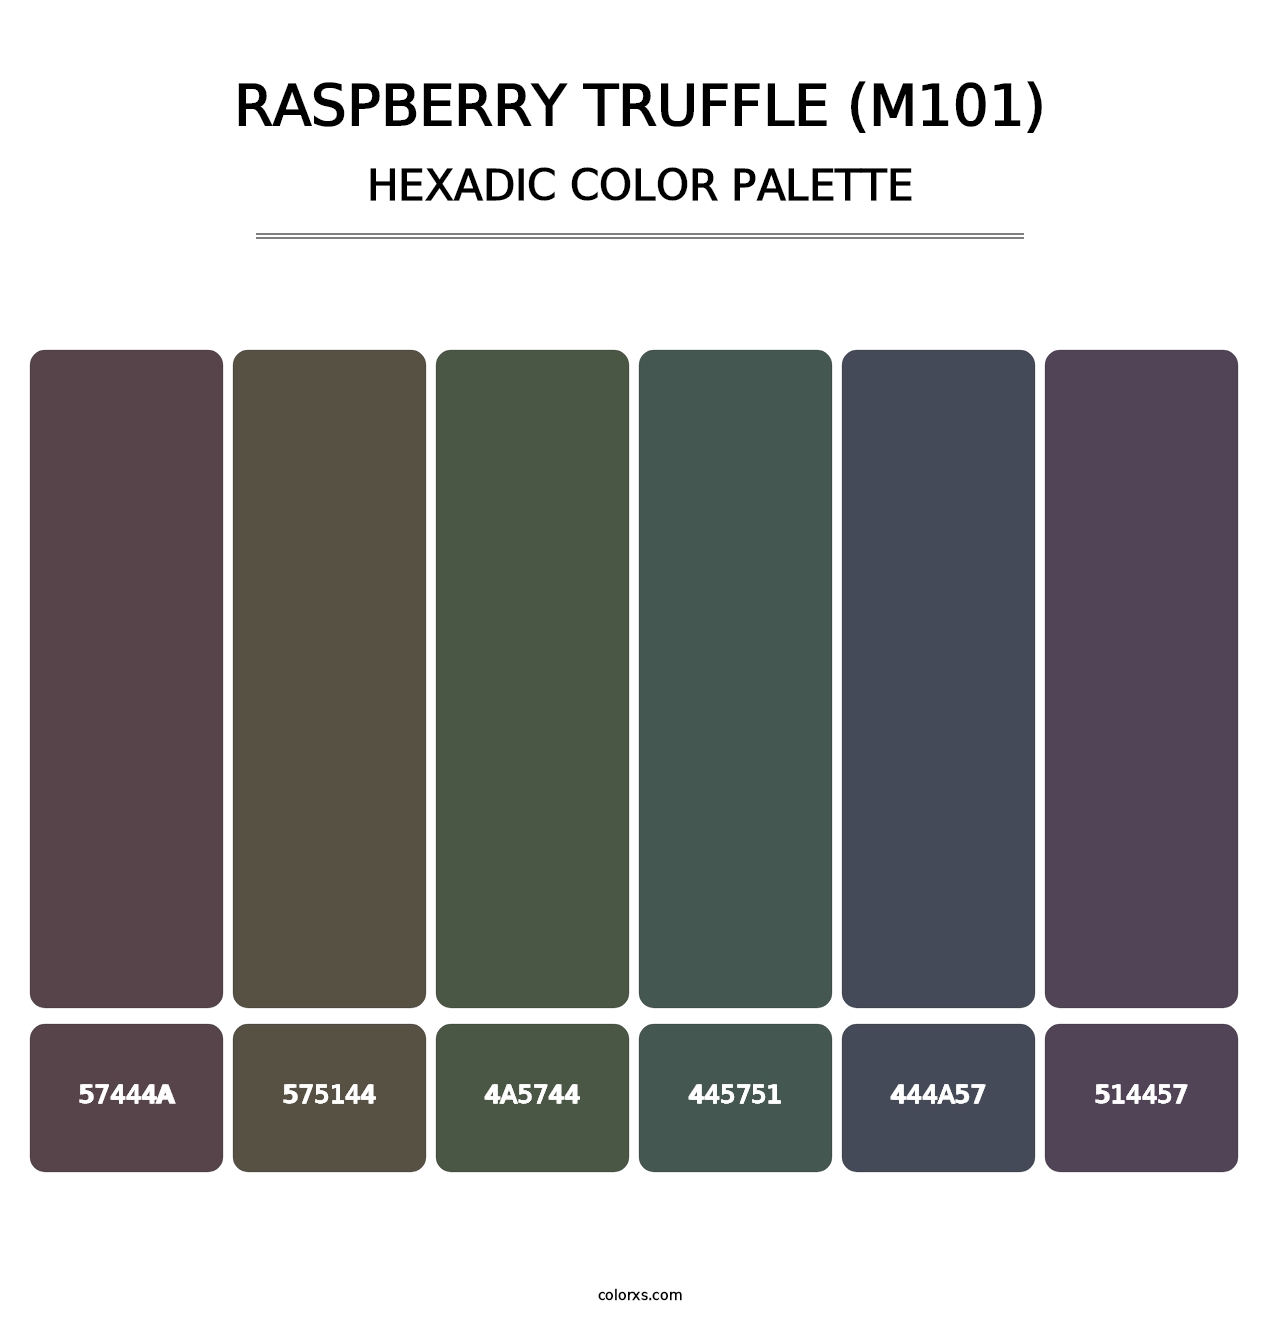 Raspberry Truffle (M101) - Hexadic Color Palette